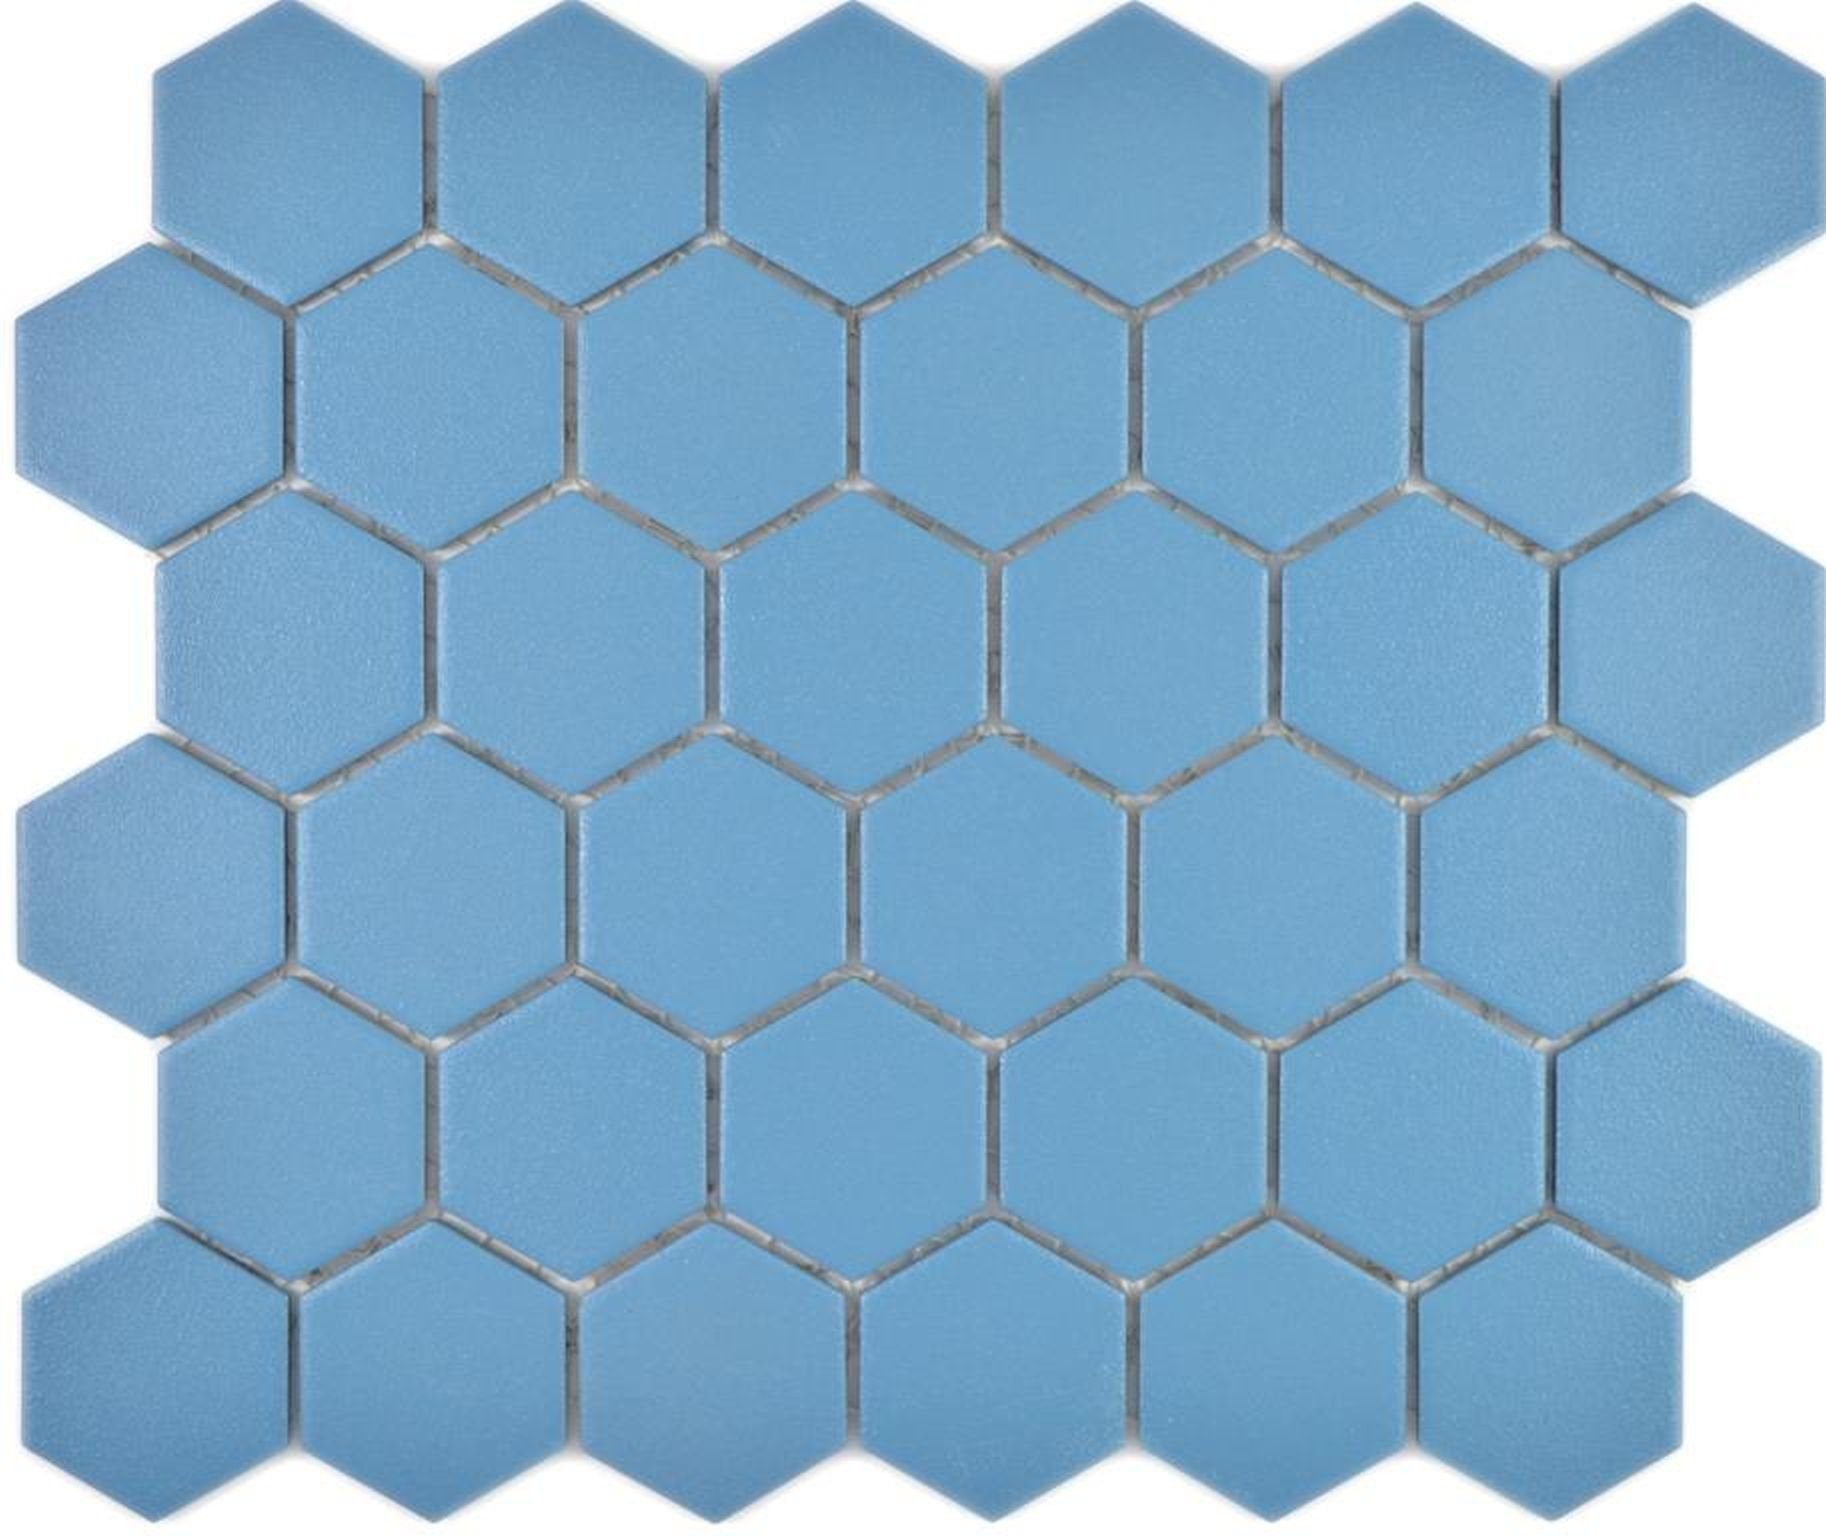 Mosani Mosaikfliesen Keramikmosaik Mosaikfliesen blaugrün matt / 10 Mosaikmatten